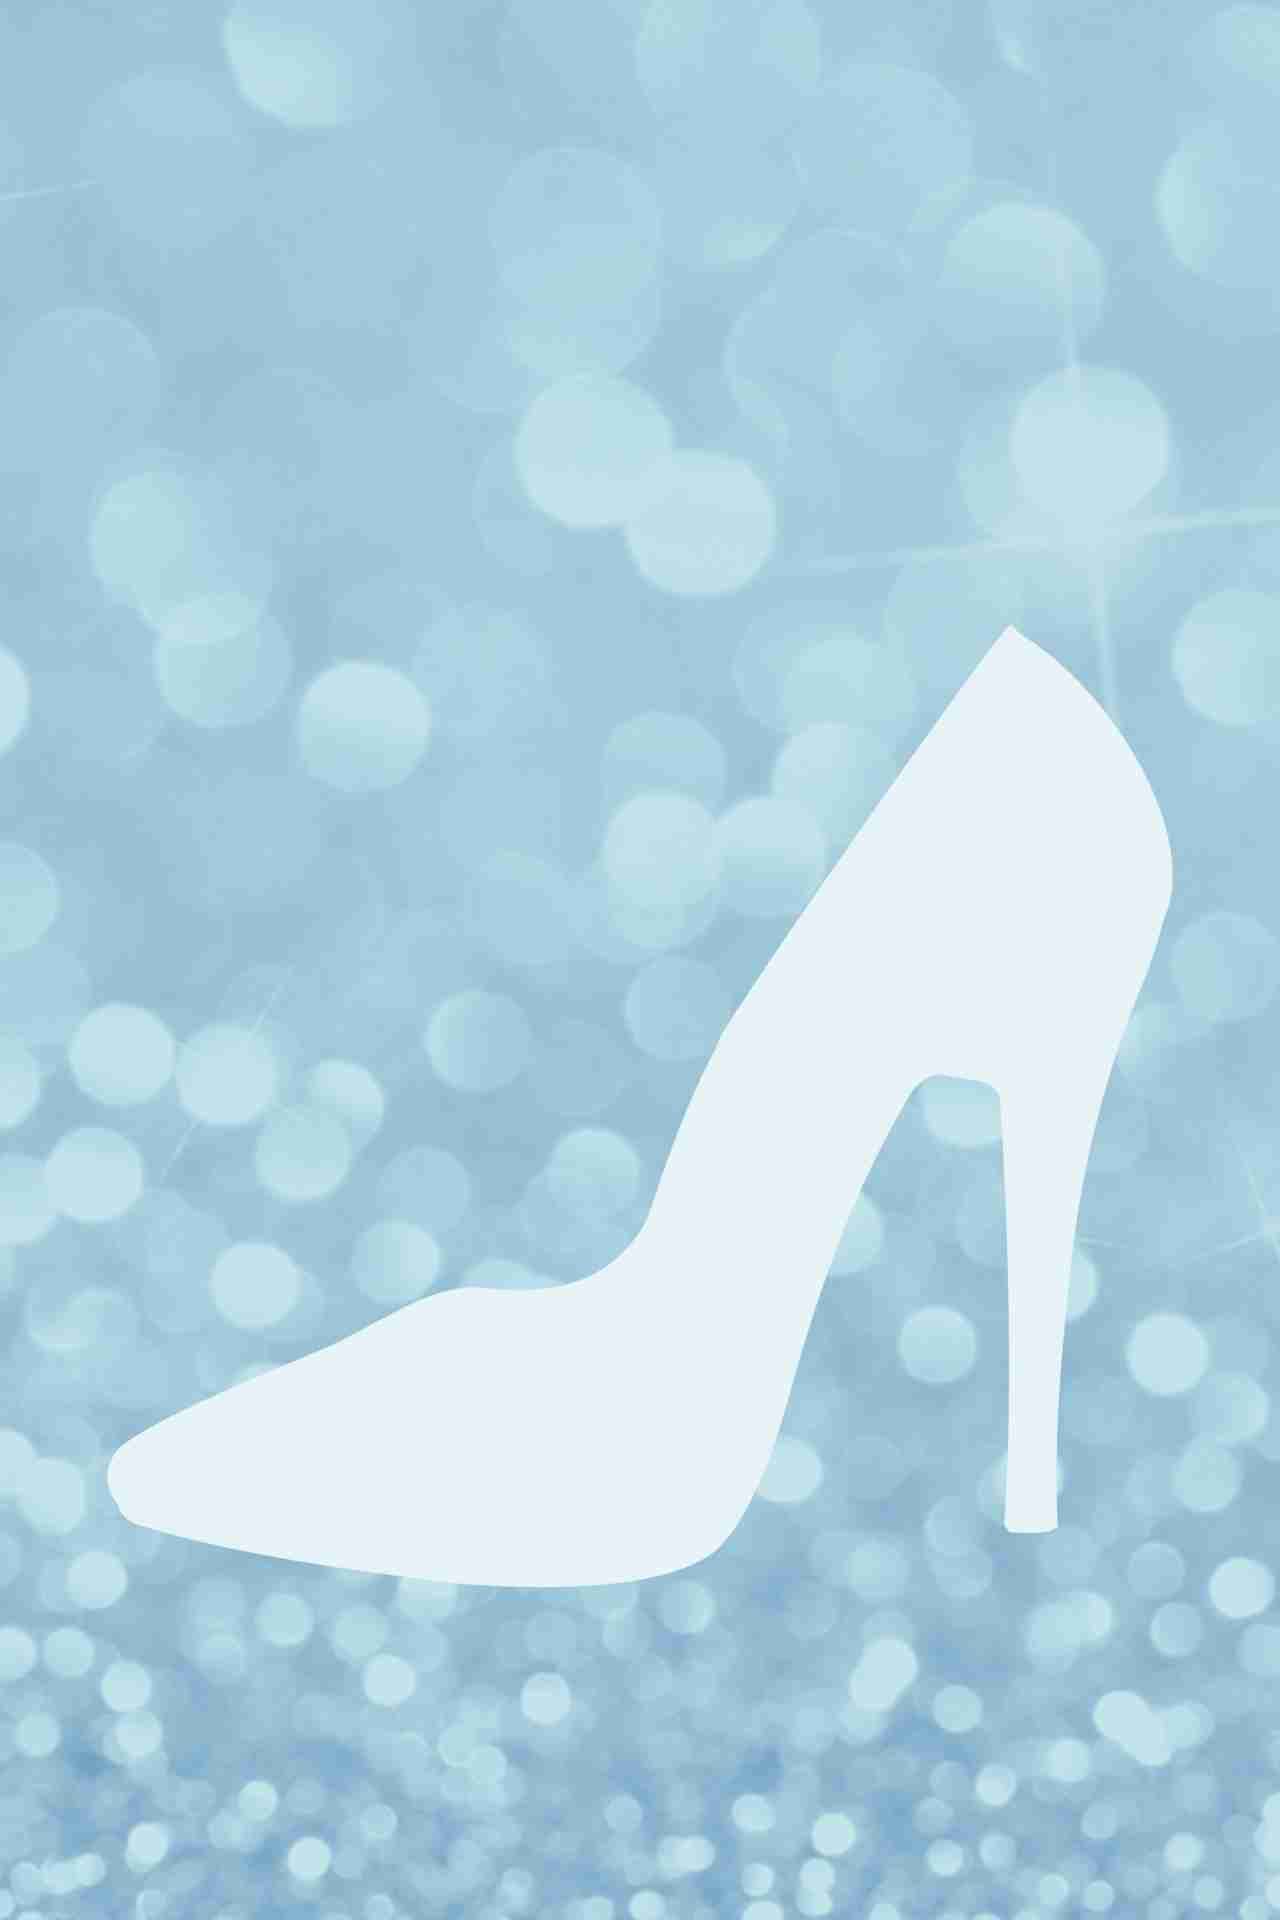 Wallpaper Tumblr Minimalist Avec Cinderella Background - Cinderella Background , HD Wallpaper & Backgrounds